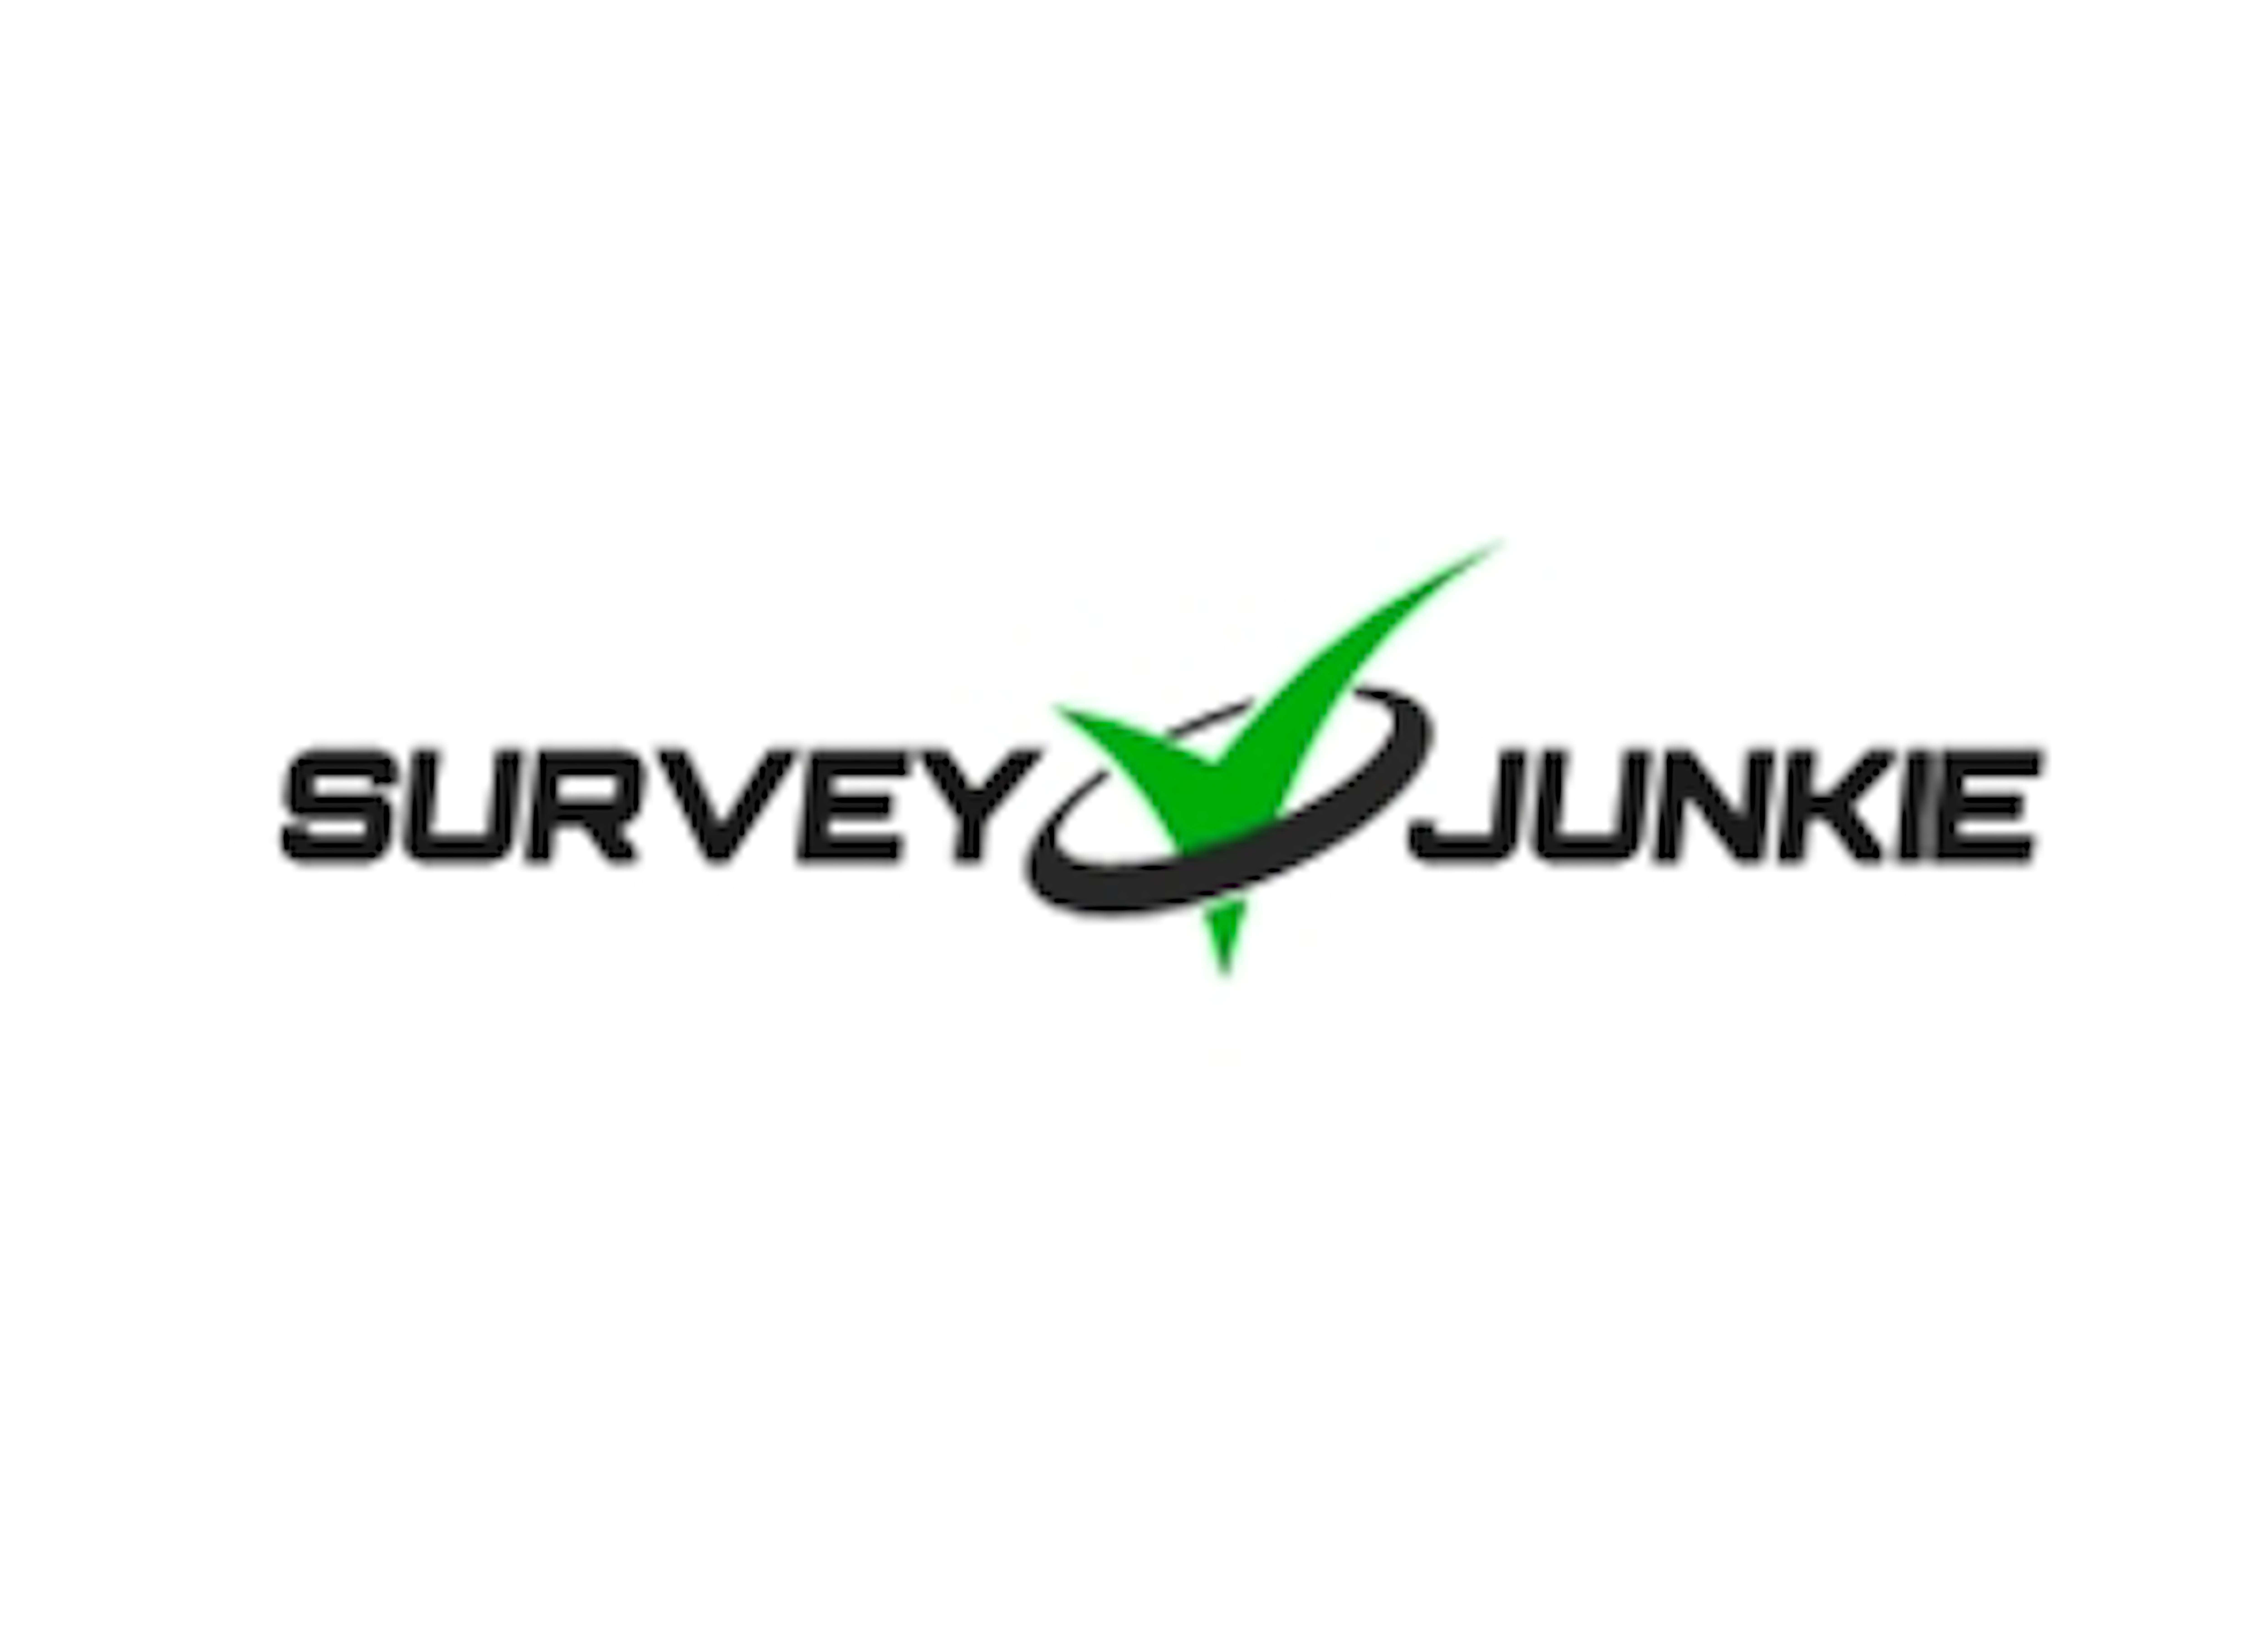 Survey Junkie